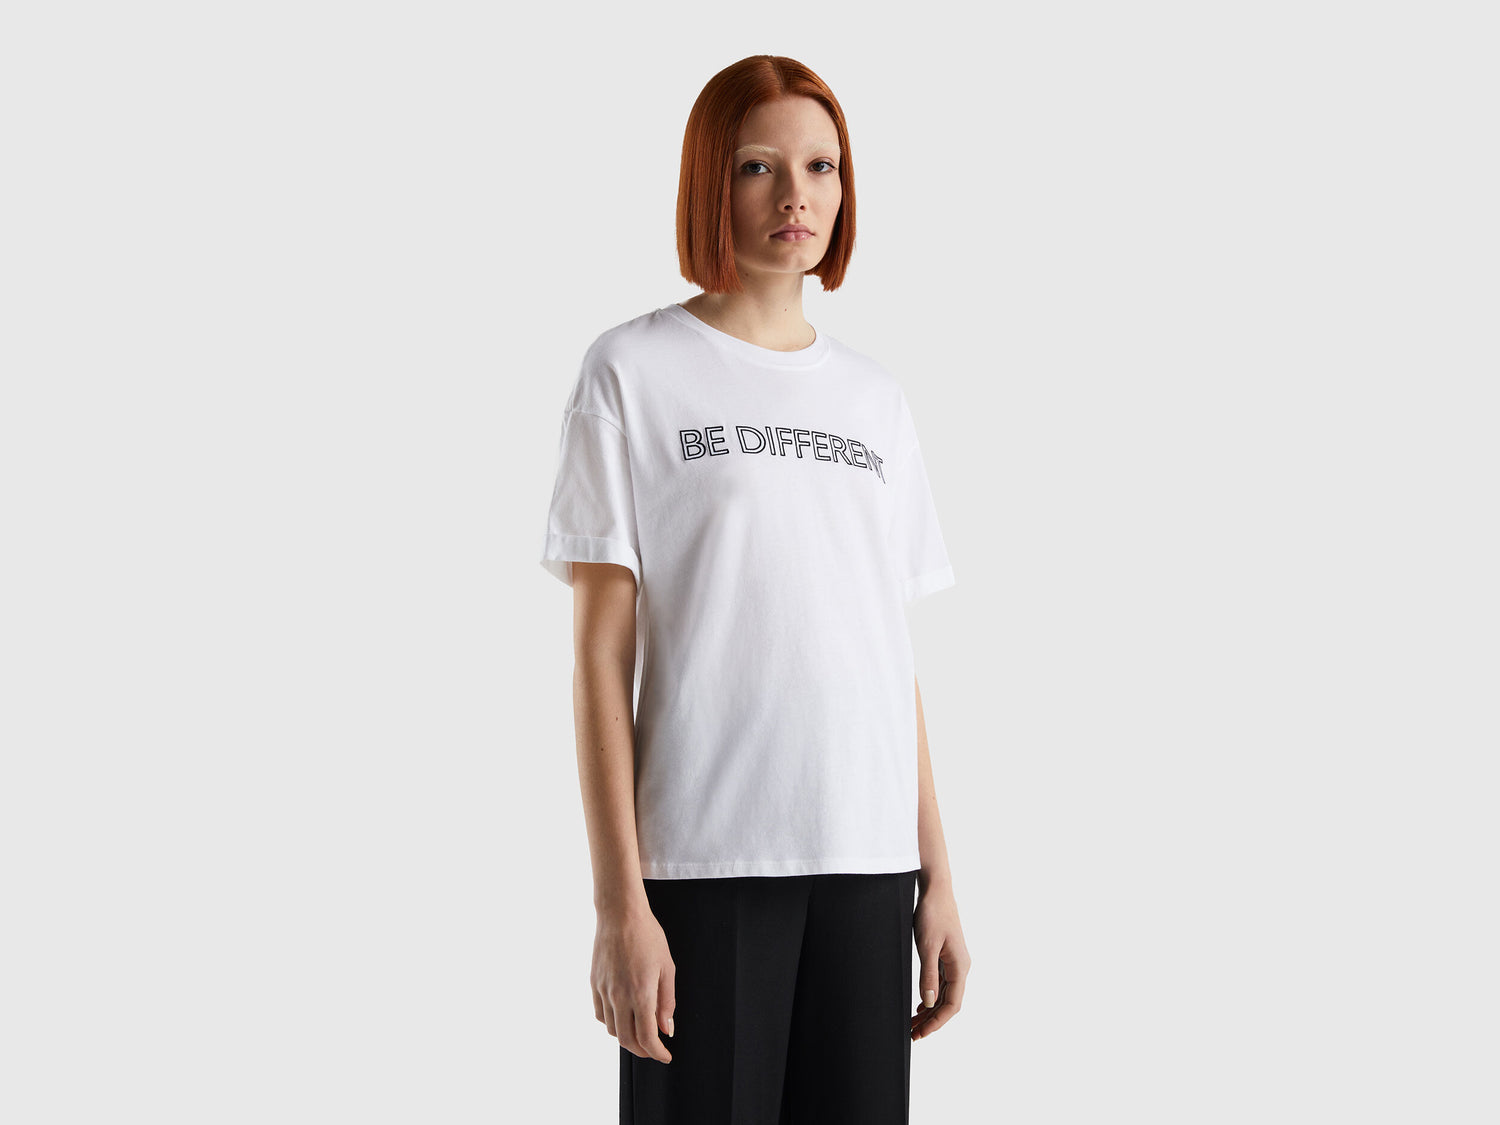 100% Cotton Shirt With Slogan